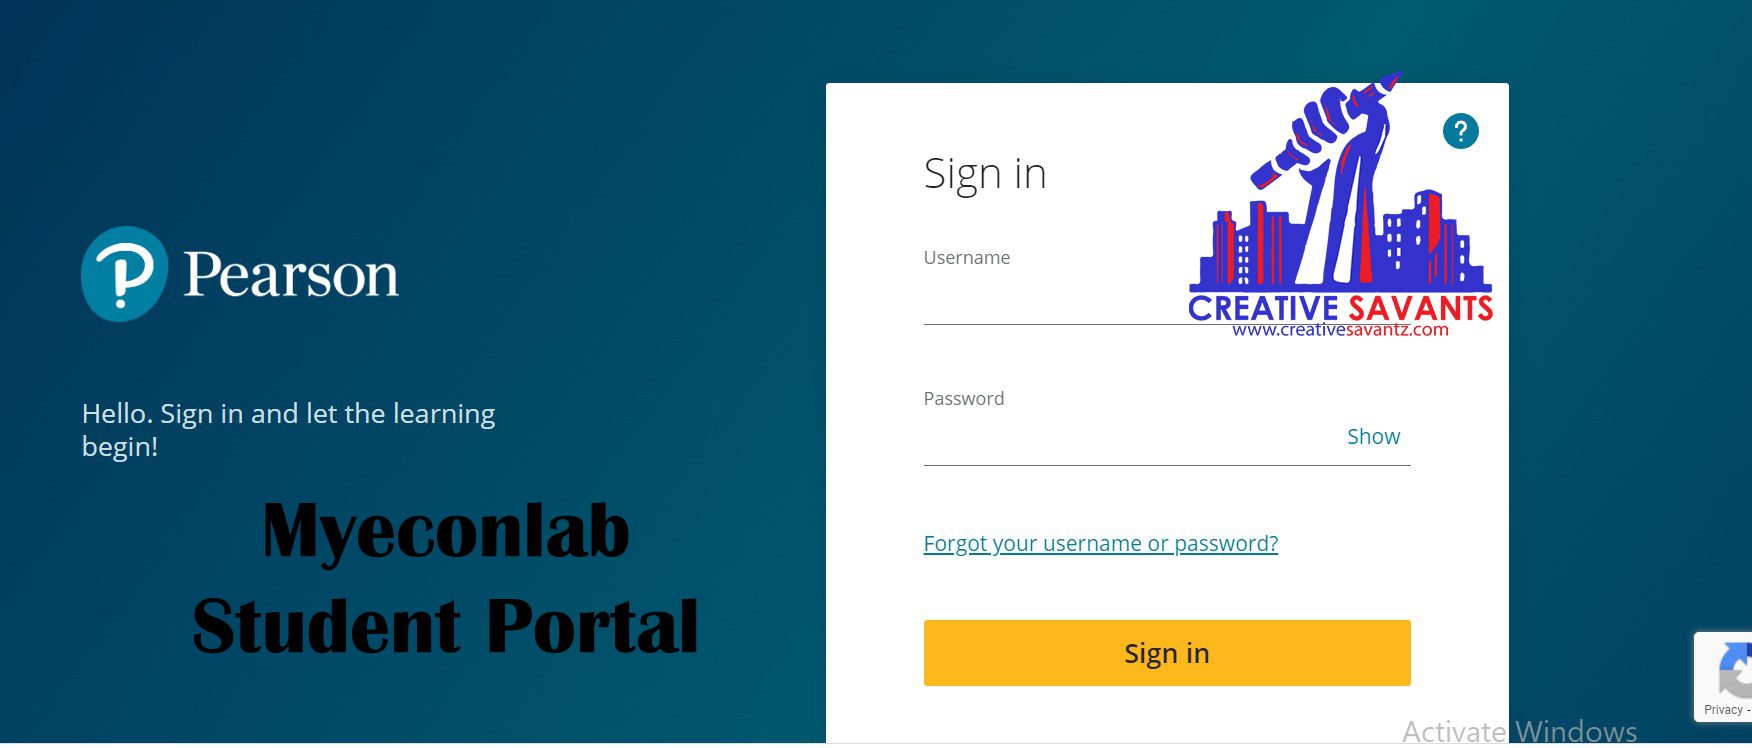 Myeconlab student portal